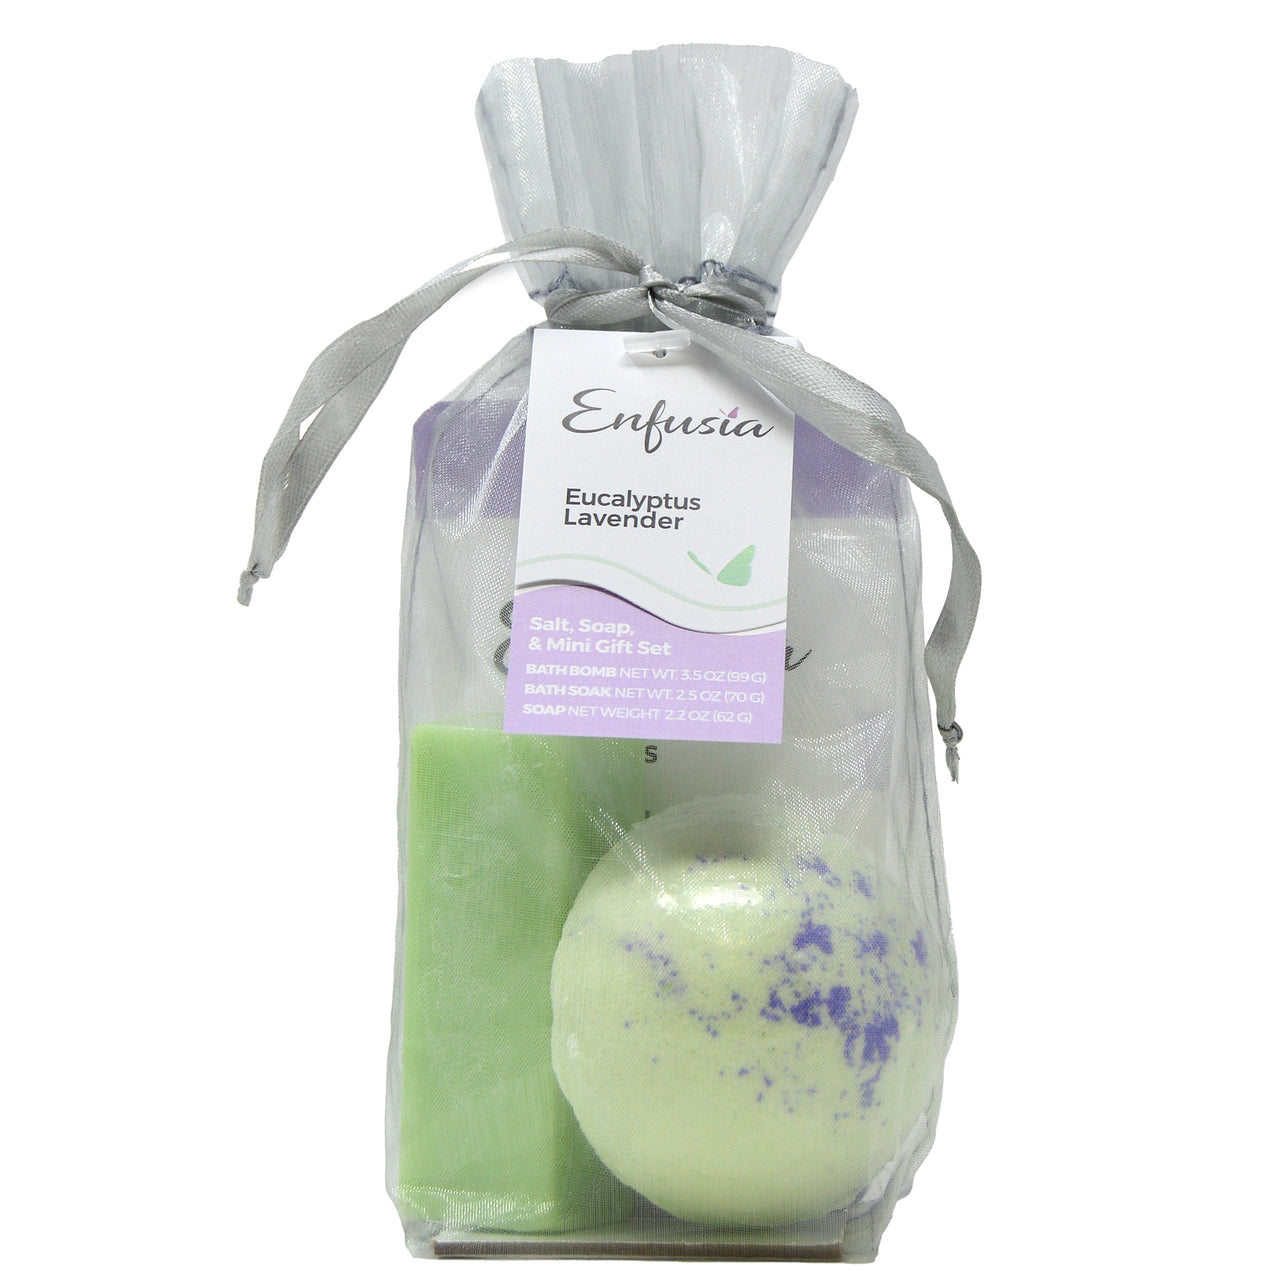 Salt, Soap, & Mini Gift Set - Eucalyptus Lavender